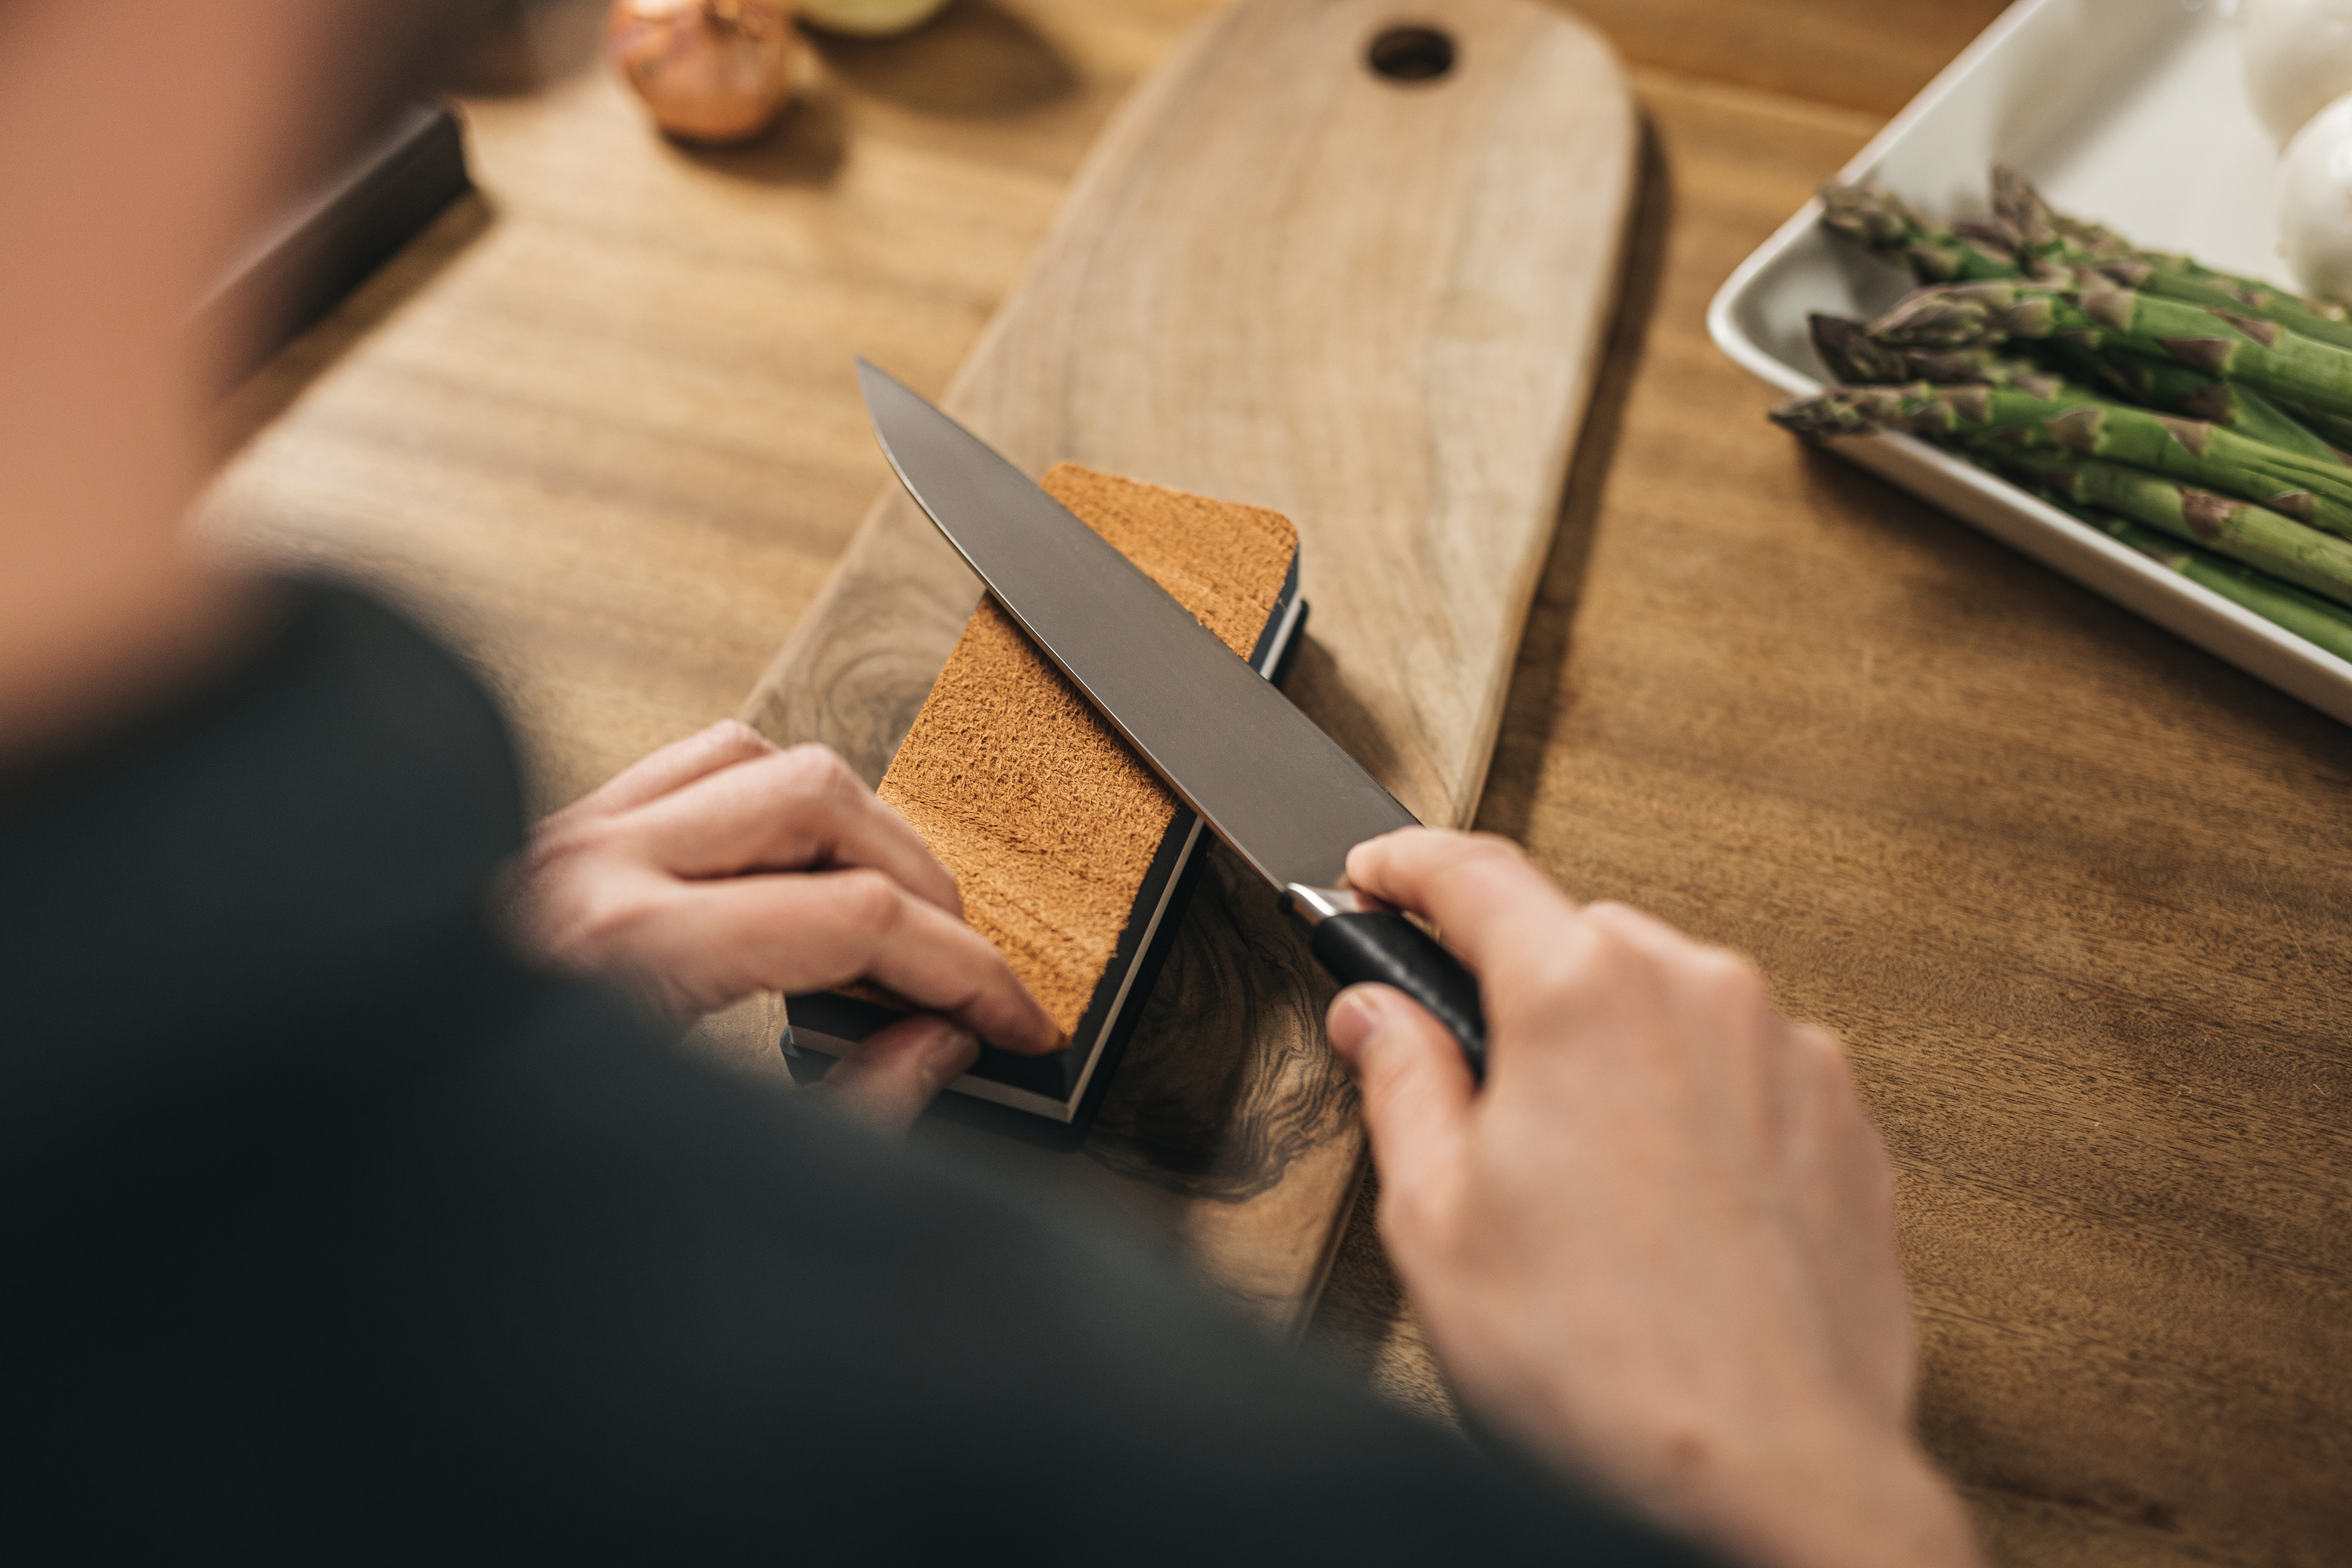 Fiskars utility knife with whetstone